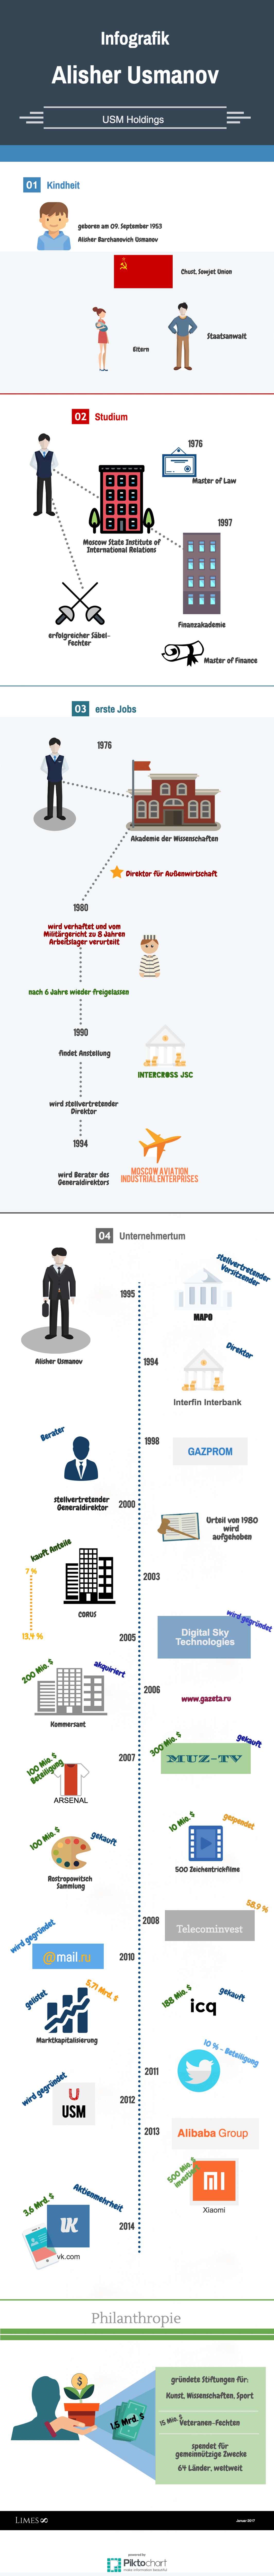 Informationsgrafik des Milliardärs Alisher Usmanov